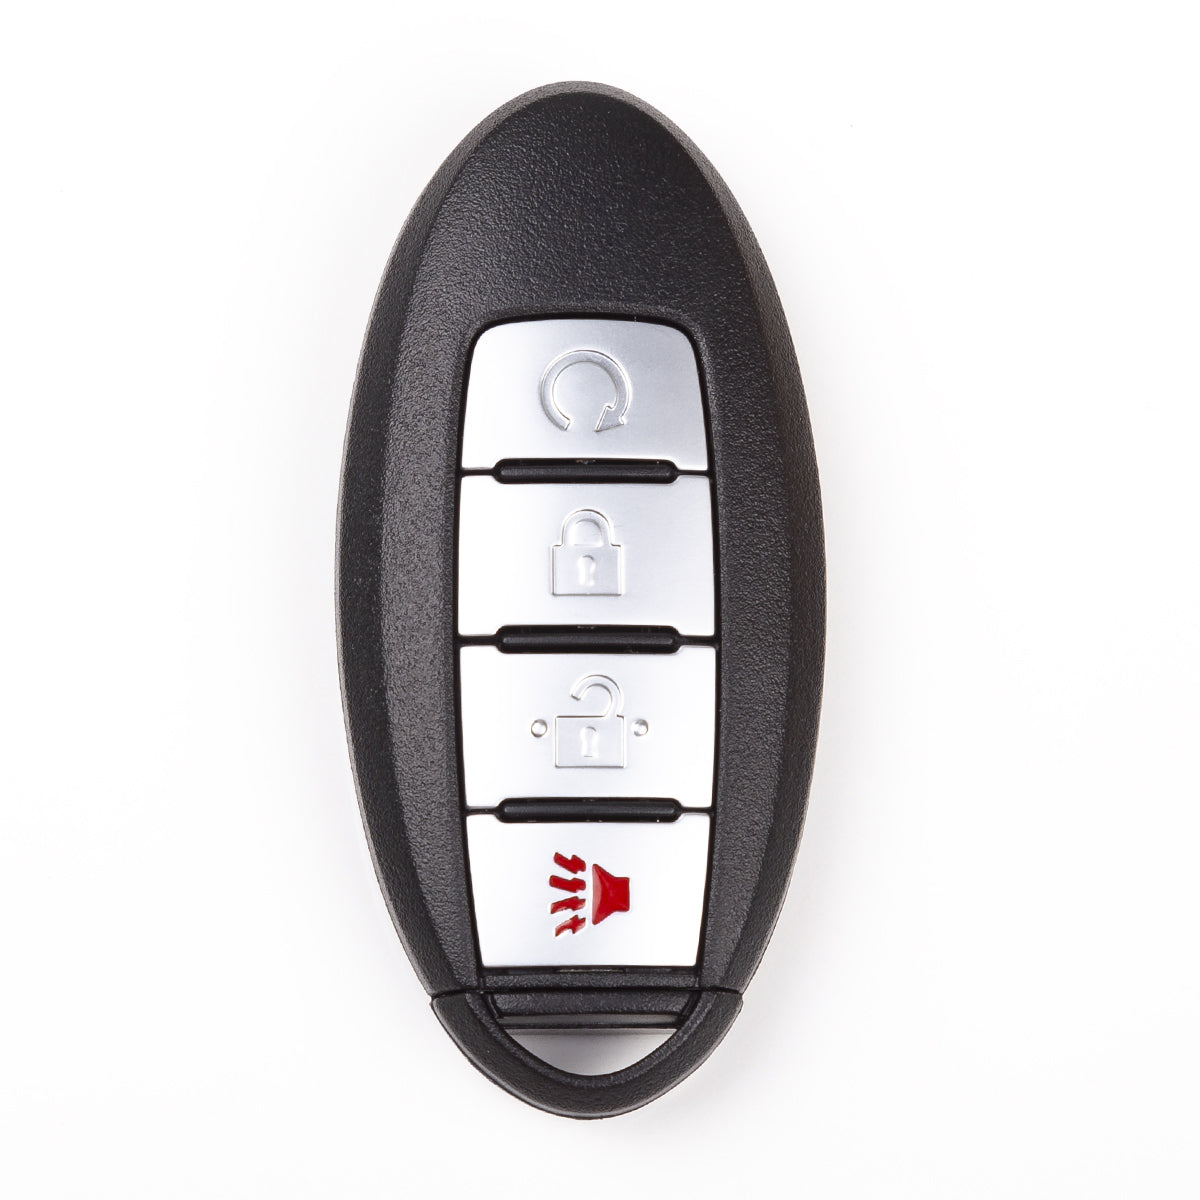 2015 2016 2017 2018 Nissan Smart Key w/ Remote Start 4 Buttons Fob FCC# KR5S180144014